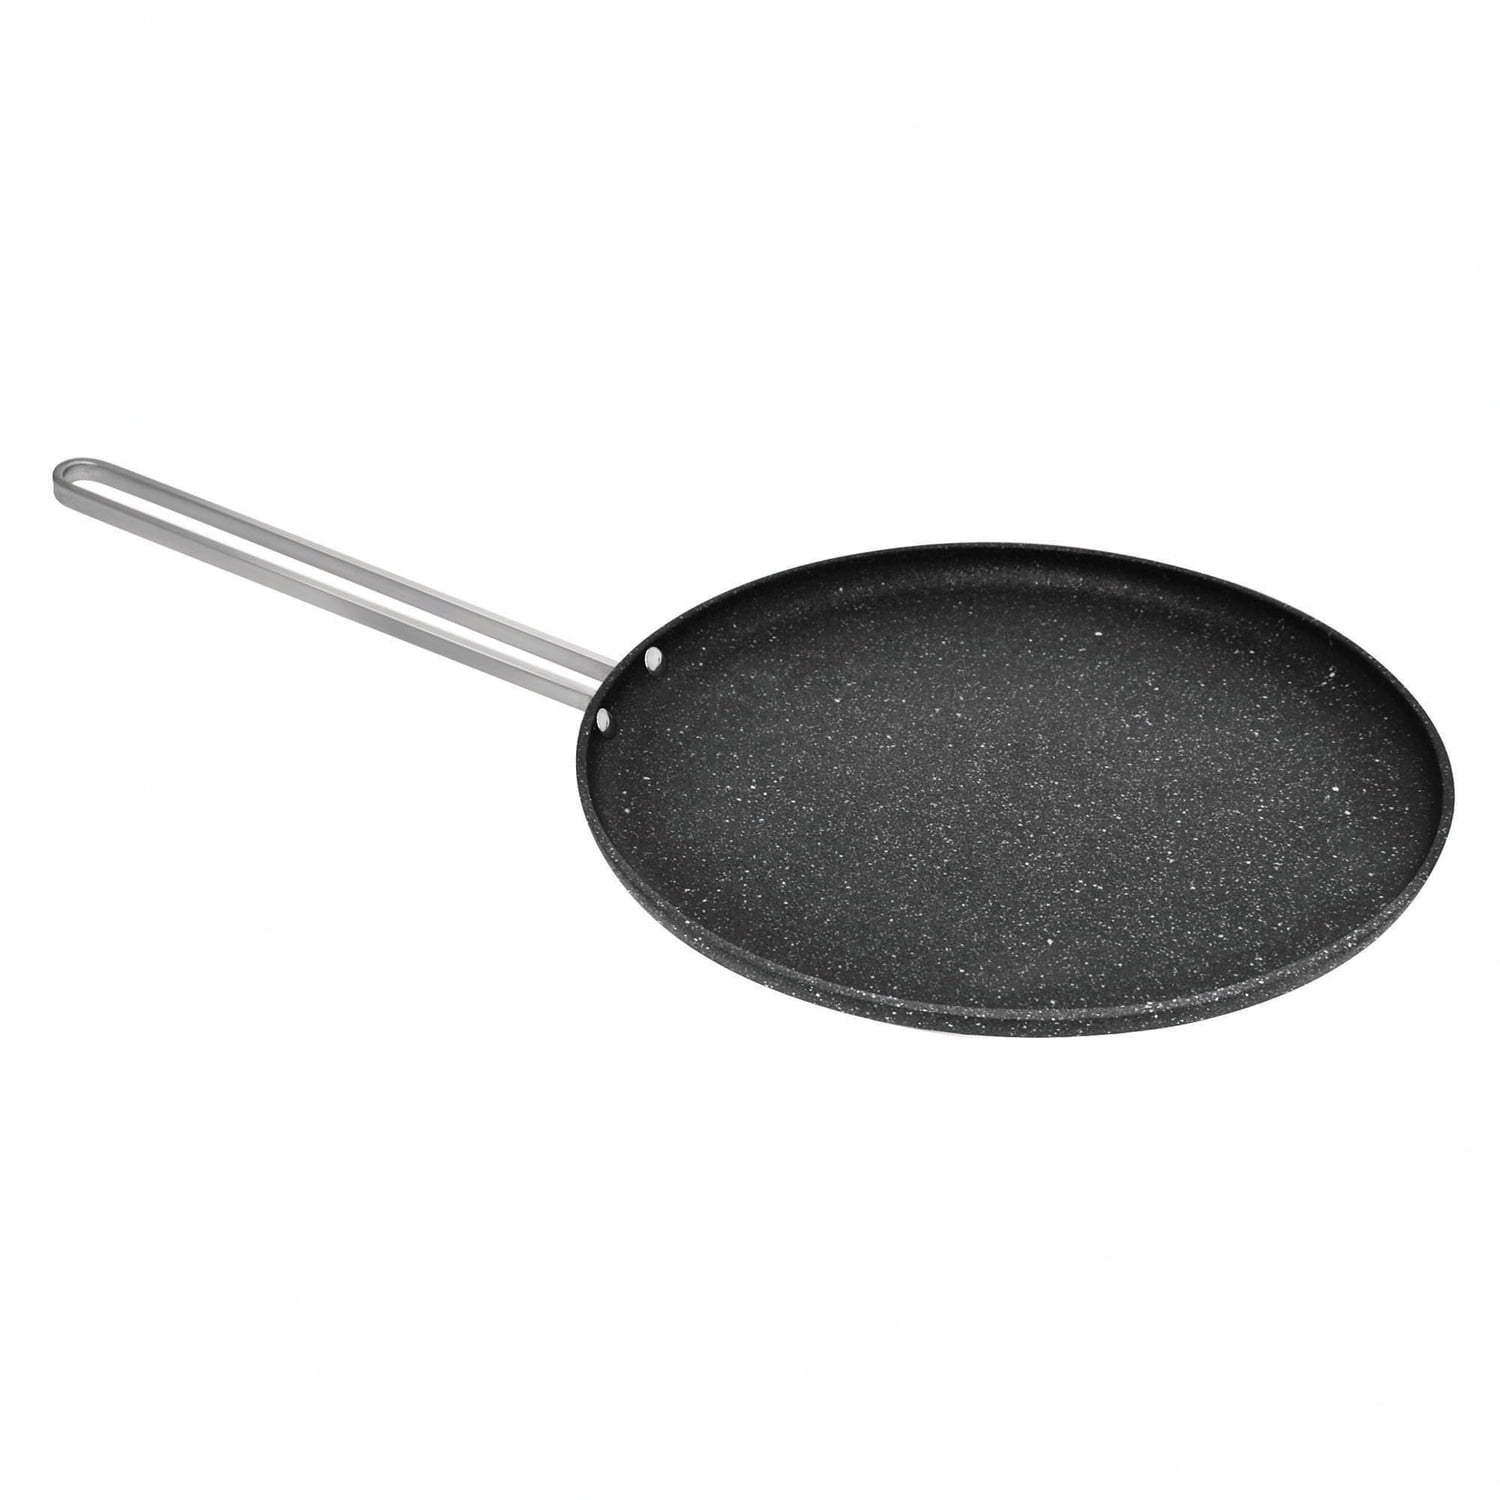 Starfrit - The Rock multi pan, 10 (25cm). Colour: black